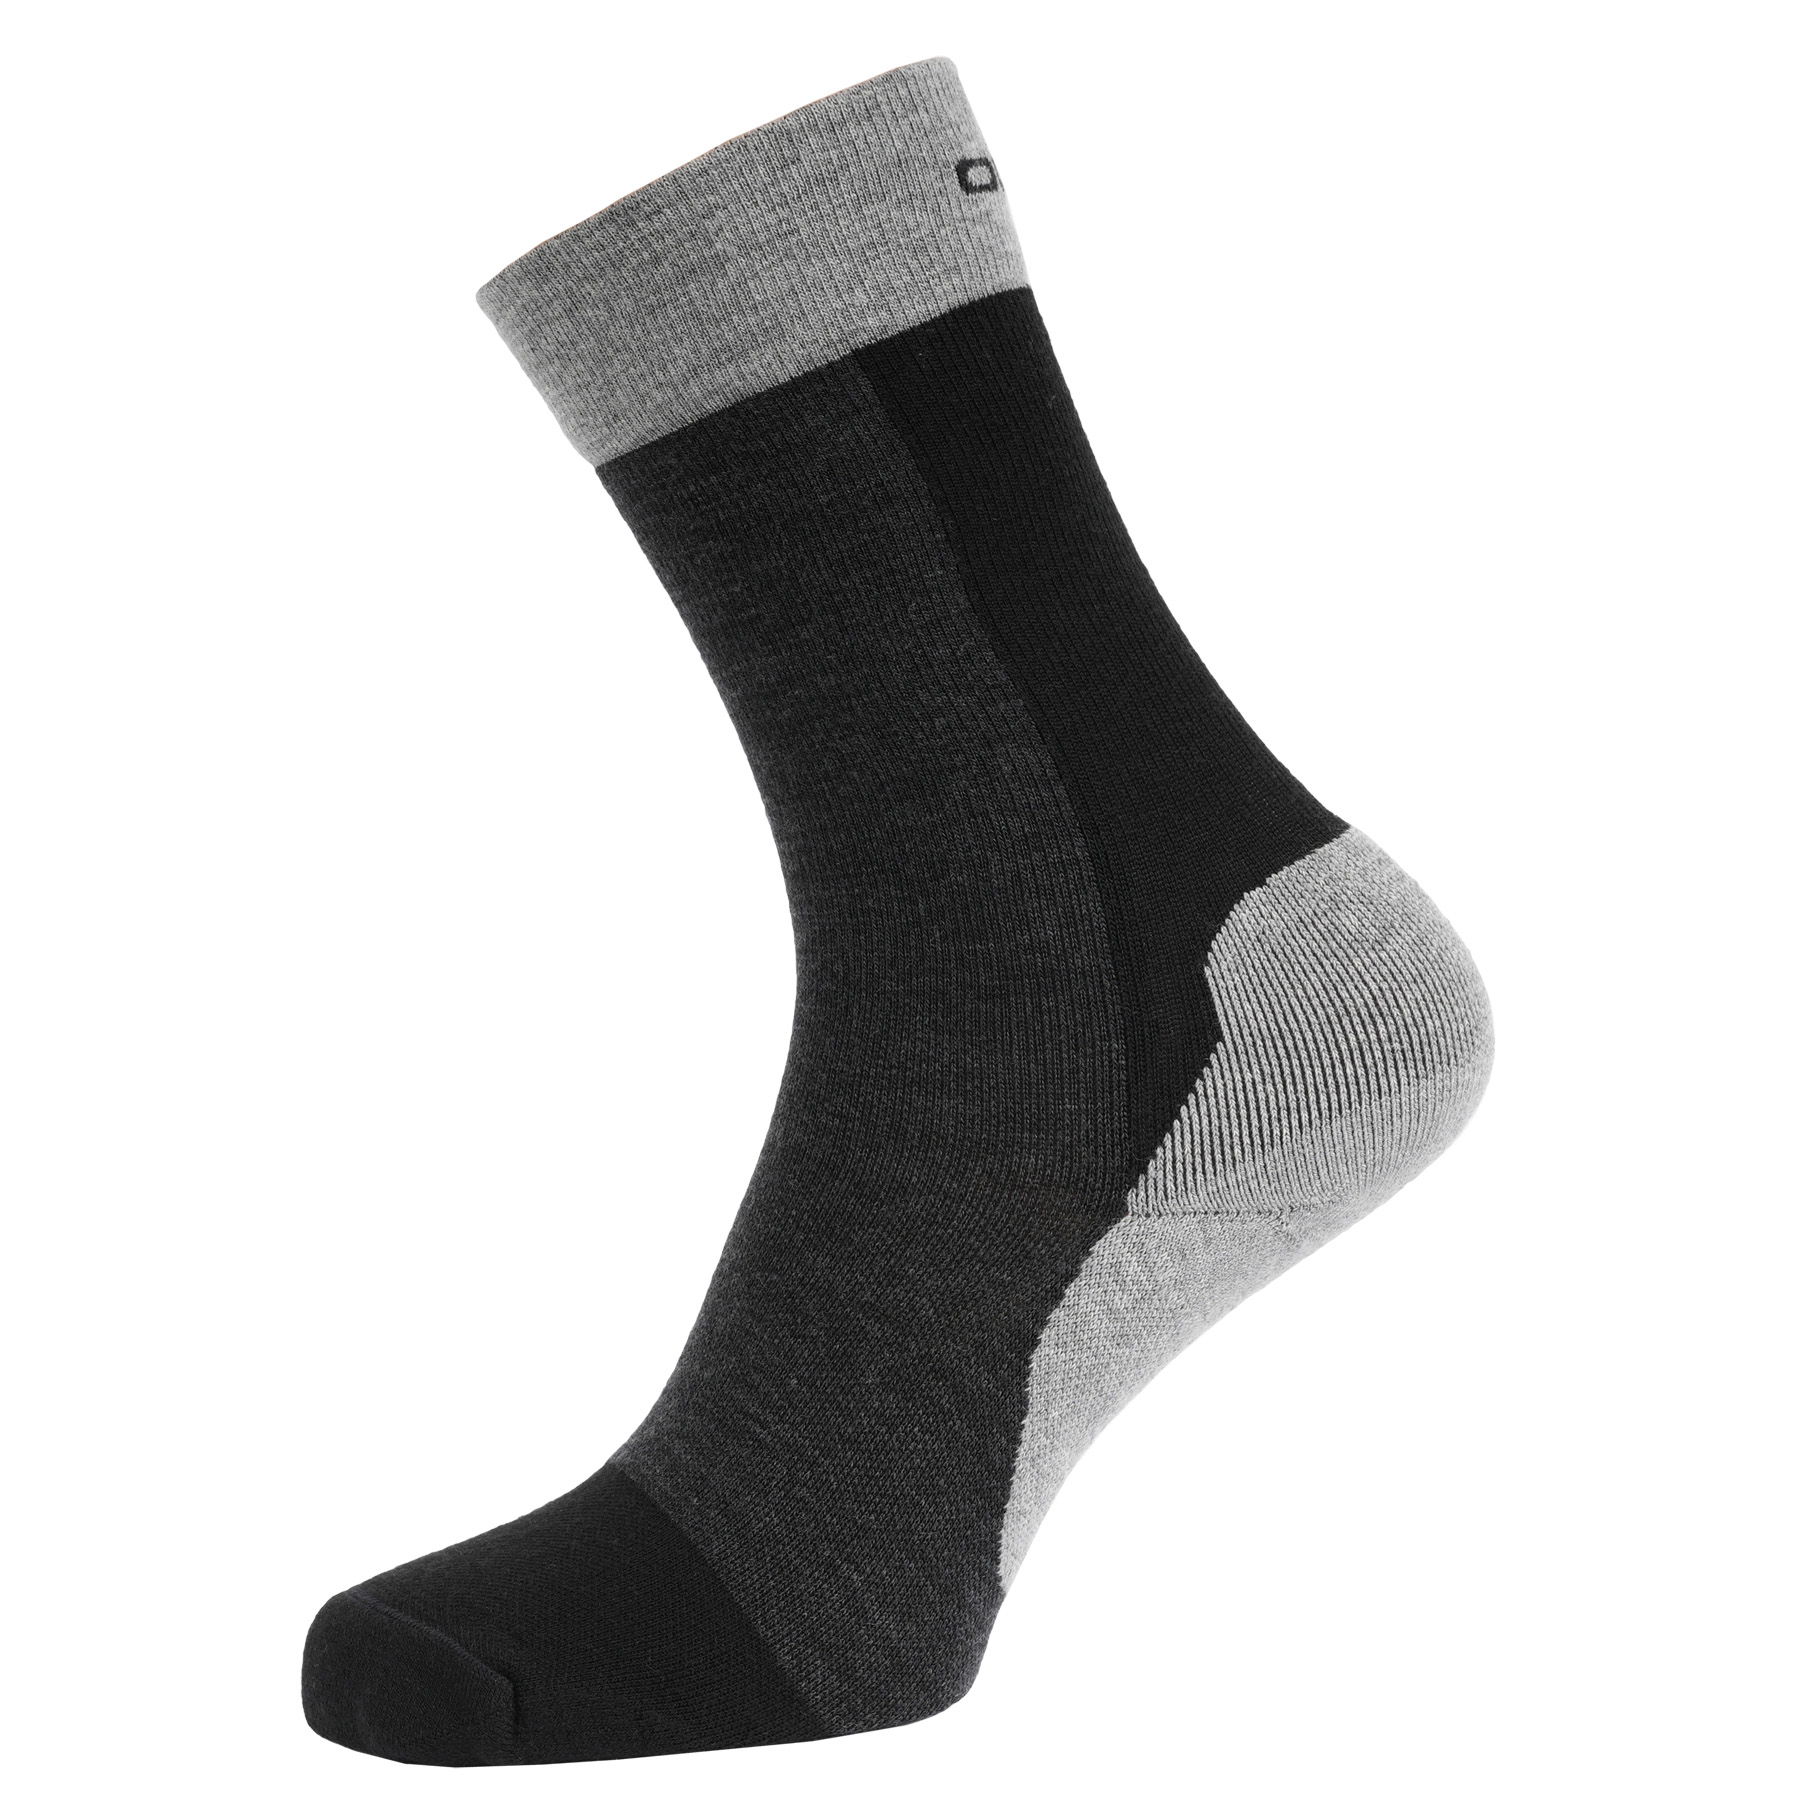 Image of Odlo Performance Wool Crew Hiking Socks - black - new odlo graphite grey